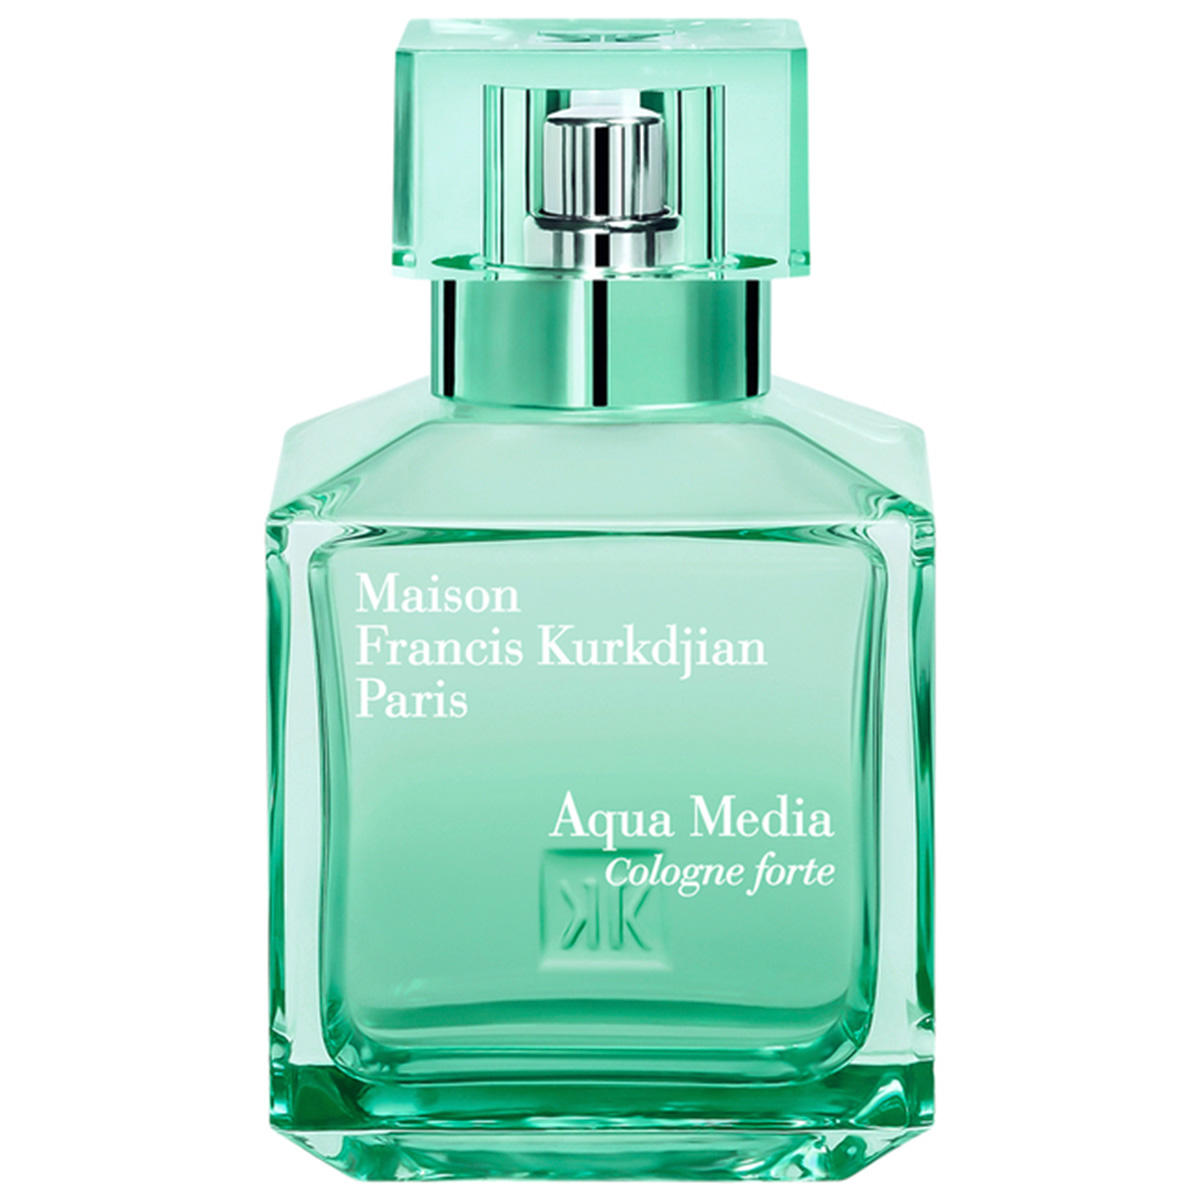 Maison Francis Kurkdjian Paris Aqua Media Cologne forte Eau de Parfum 70 ml - 1